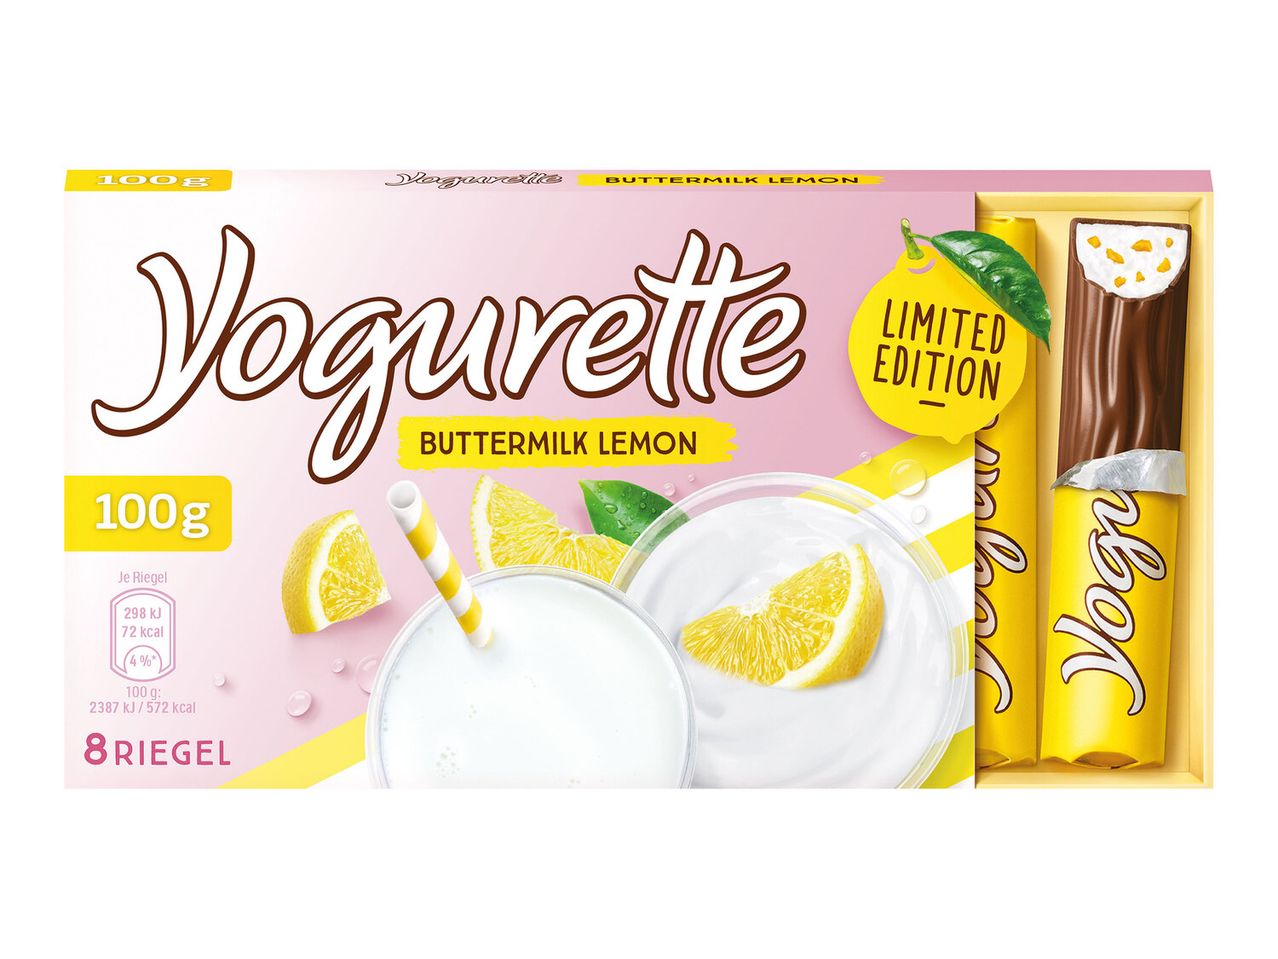 Buttermilk Yogurette Lemon